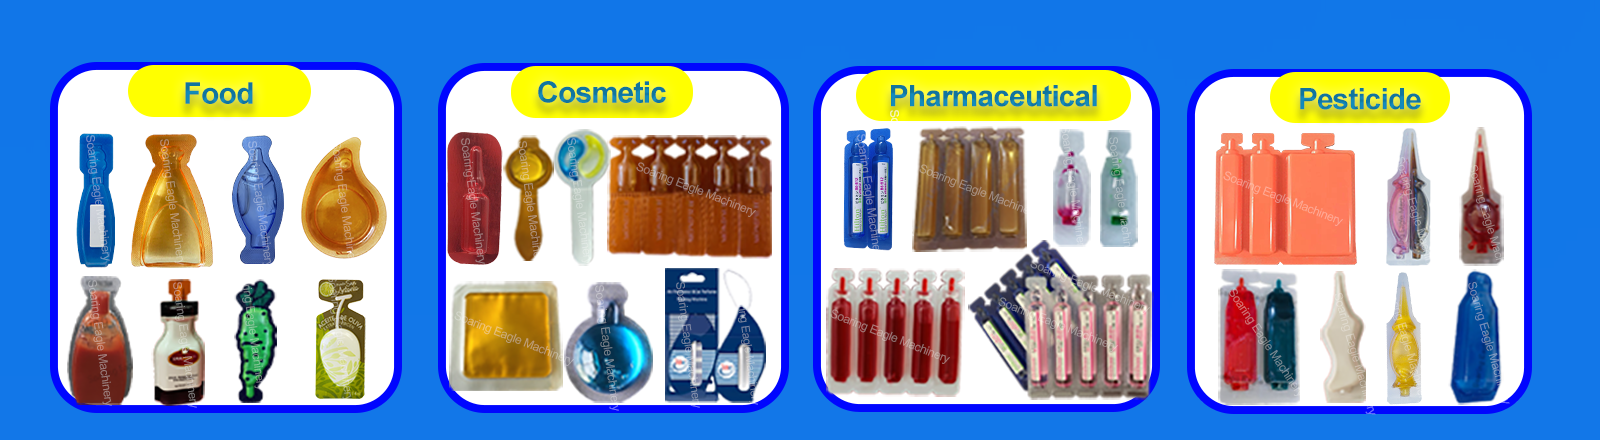 DGS240 pharmaceutical cosmetic cream honey food liquid forming filling sealing packing machine